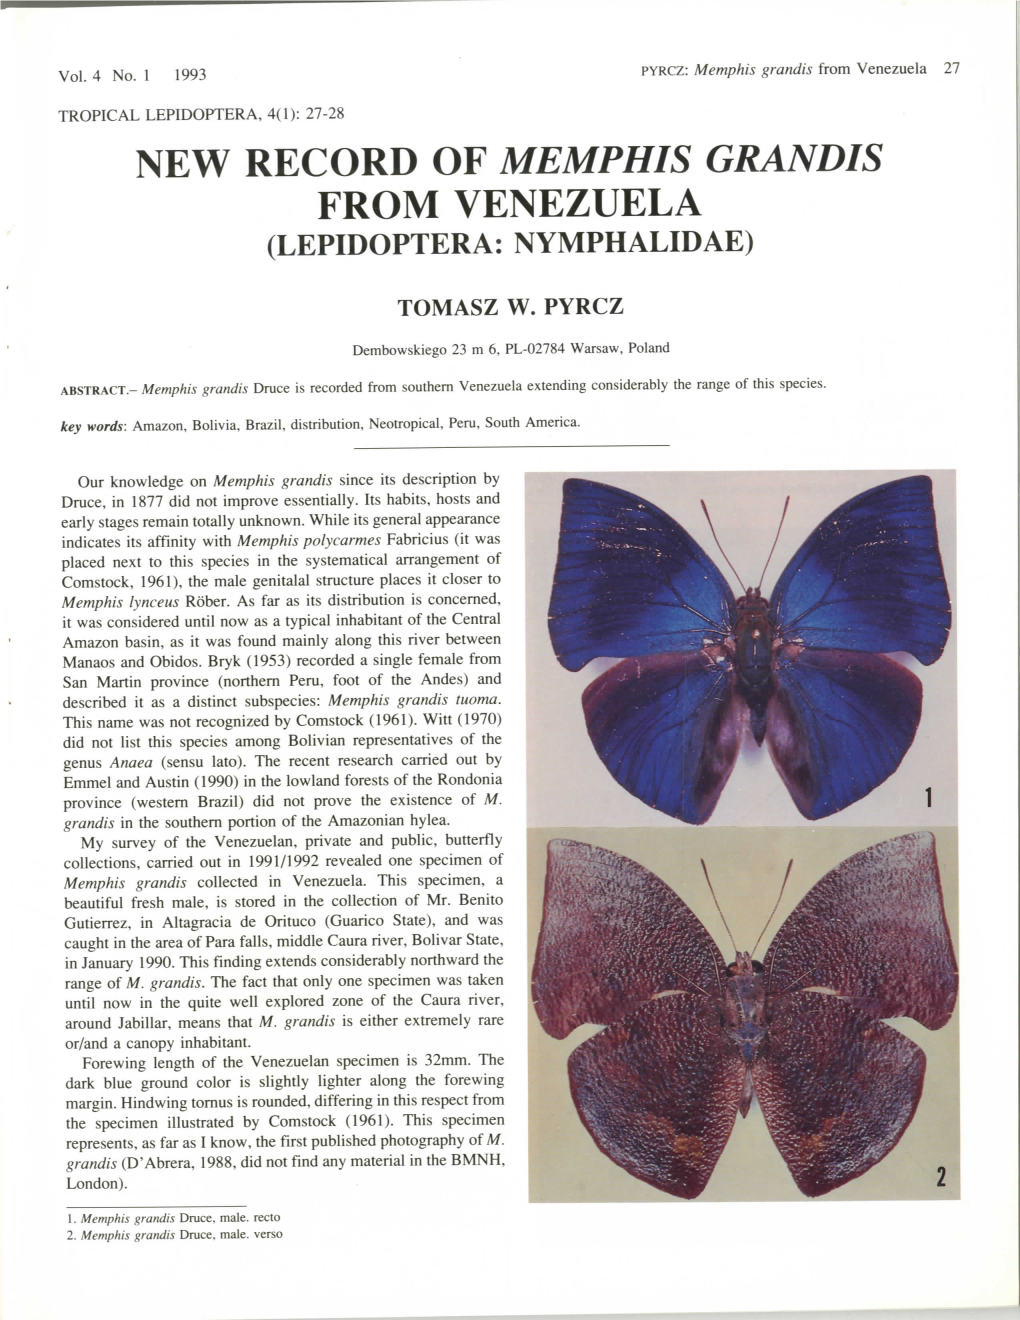 New Record of Memphis Grandis from Venezuela (Lepidoptera: Nymphalidae)